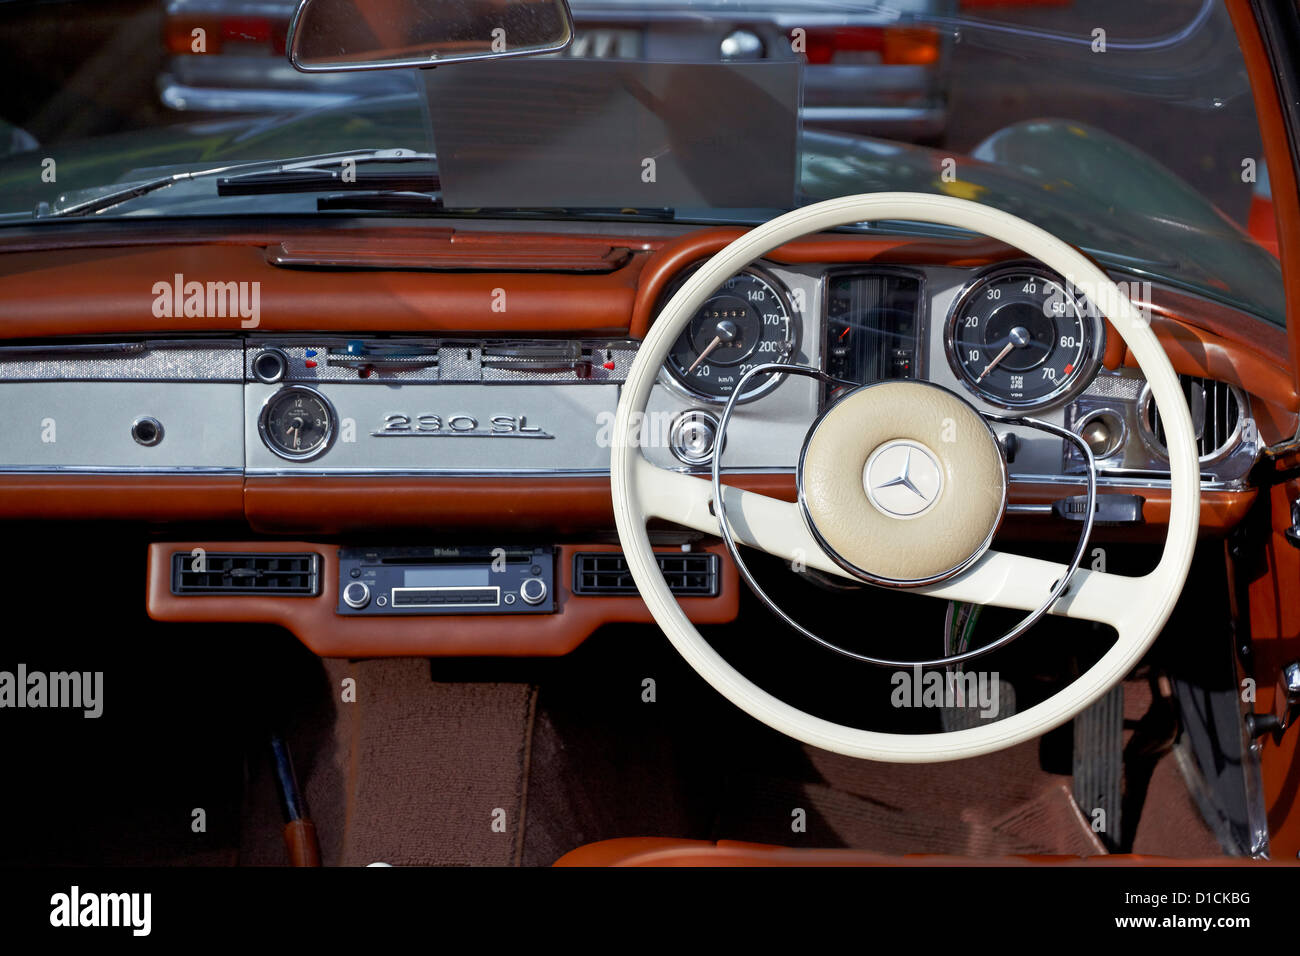 Mercedes 230 SL Interior.  View of cockpit of vintage motor car Stock Photo